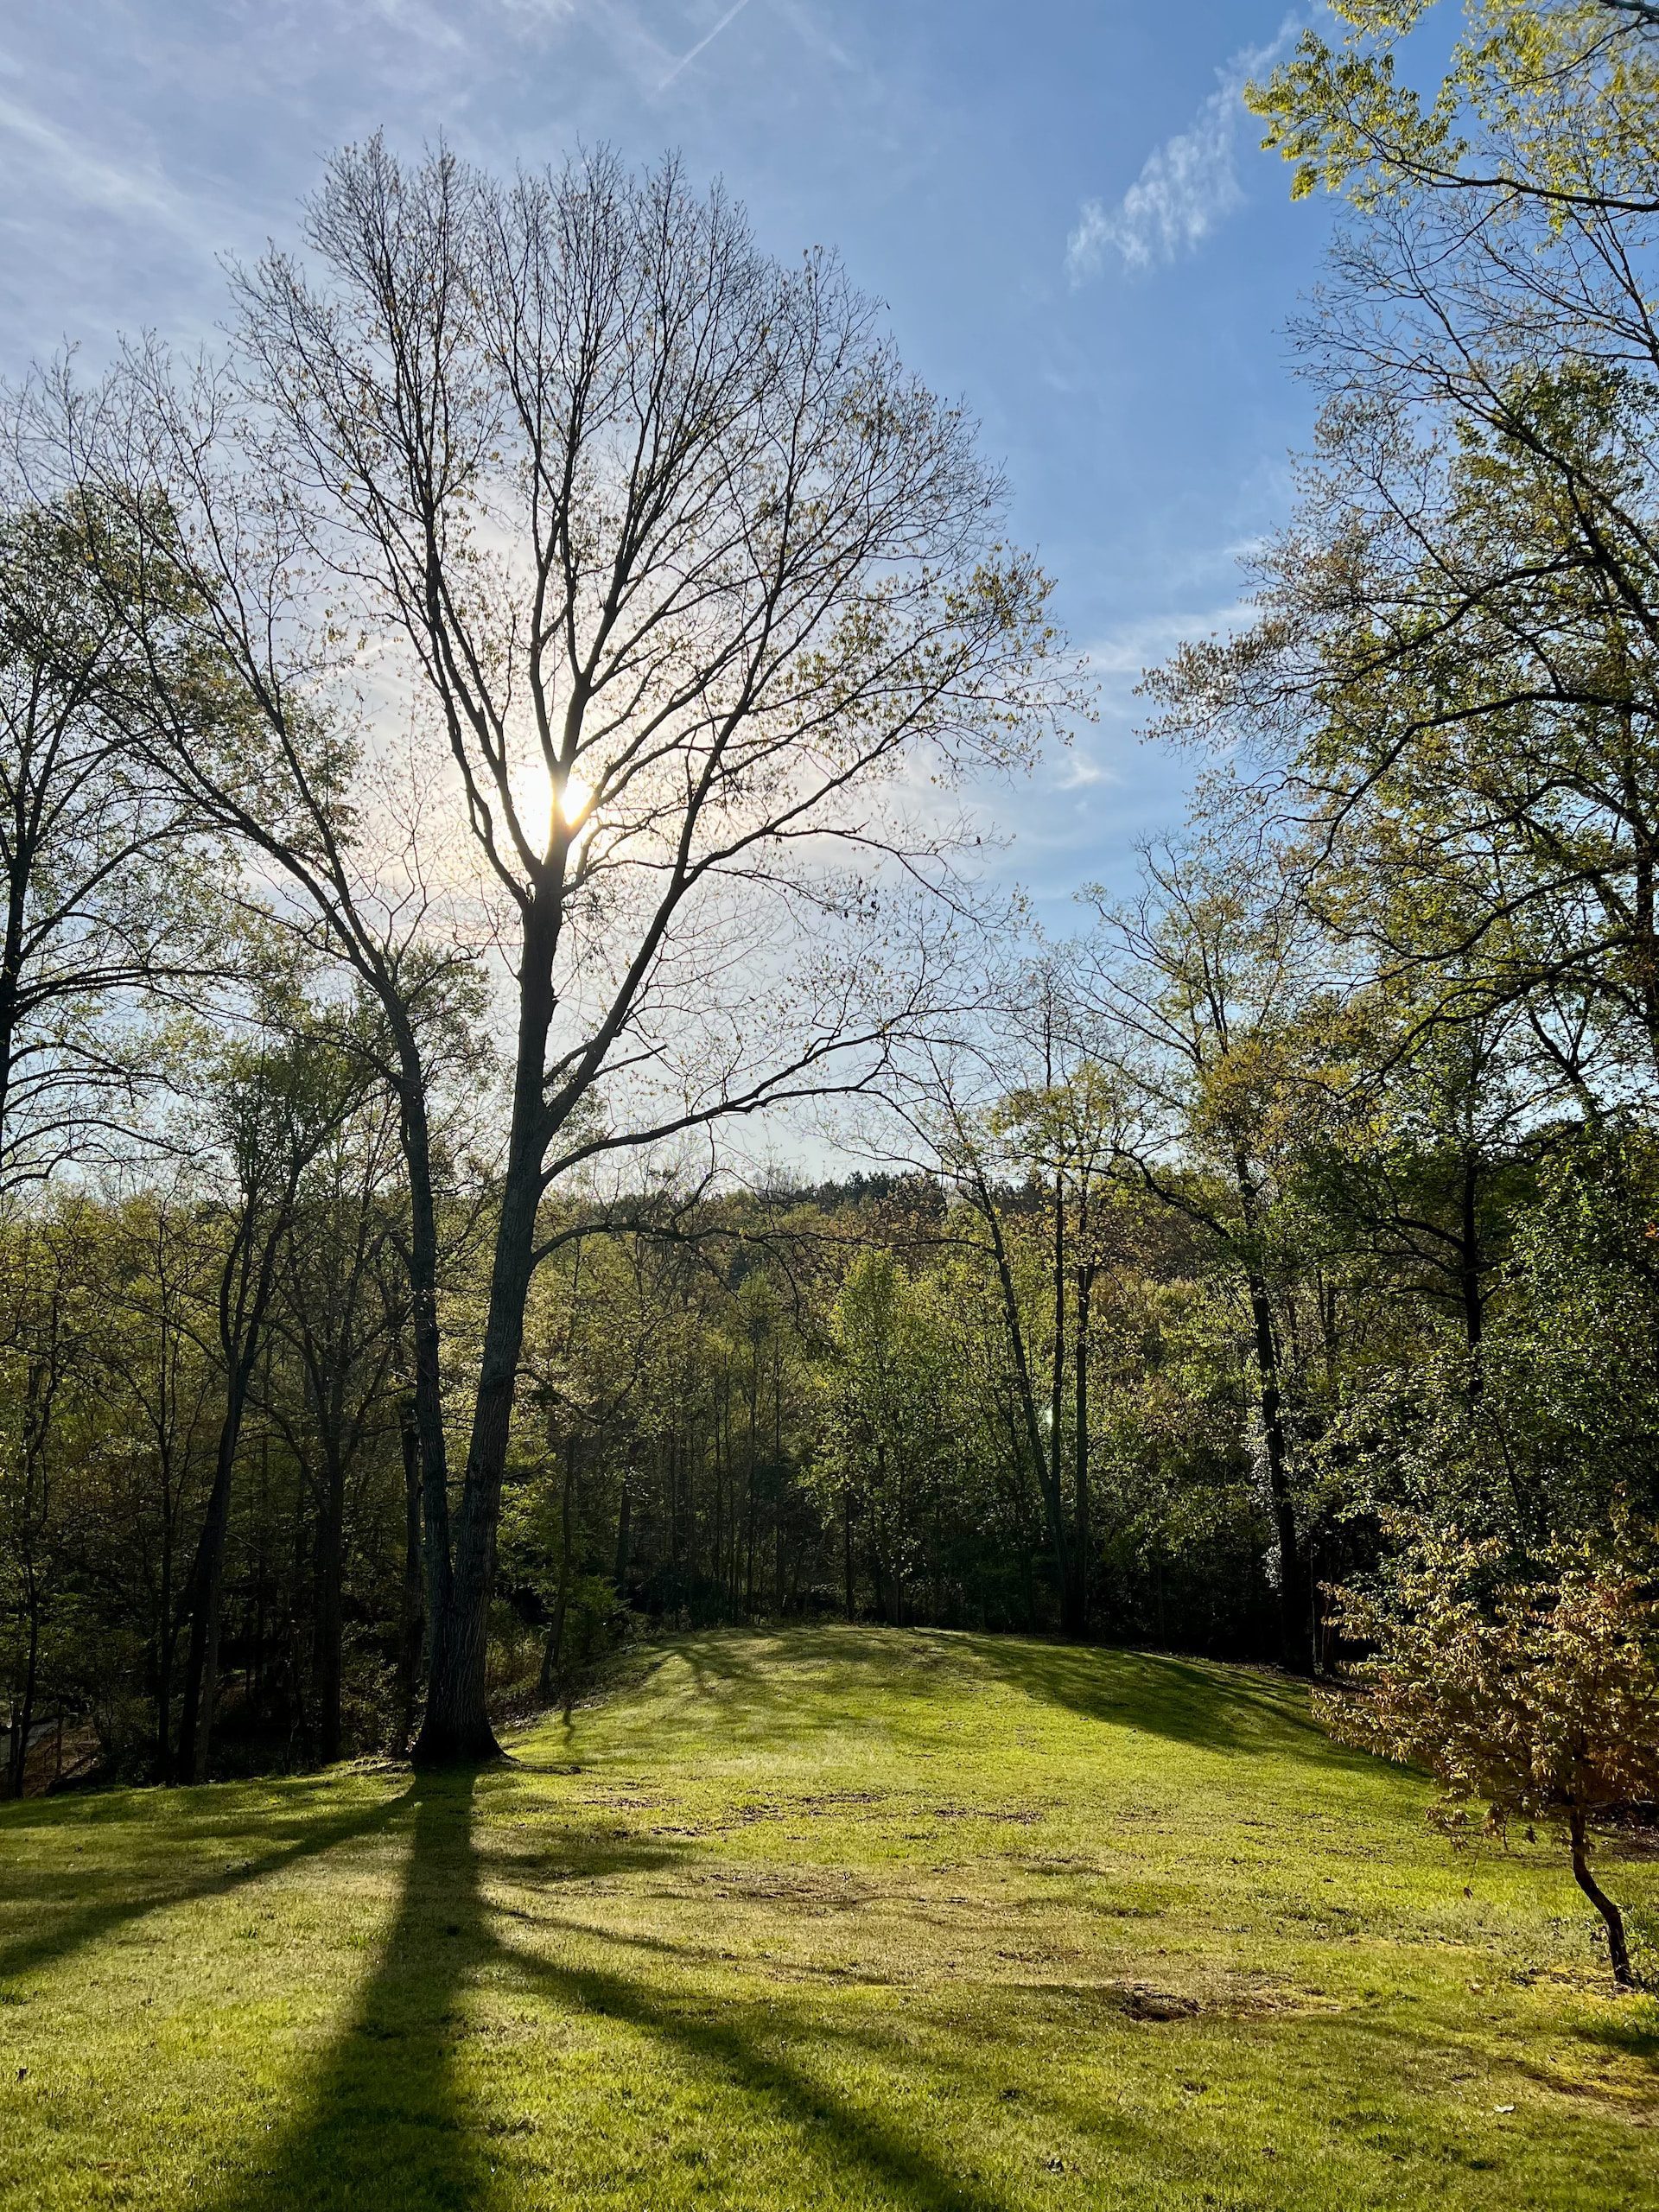 Trees and sunshine in Aiken, South Carolina.